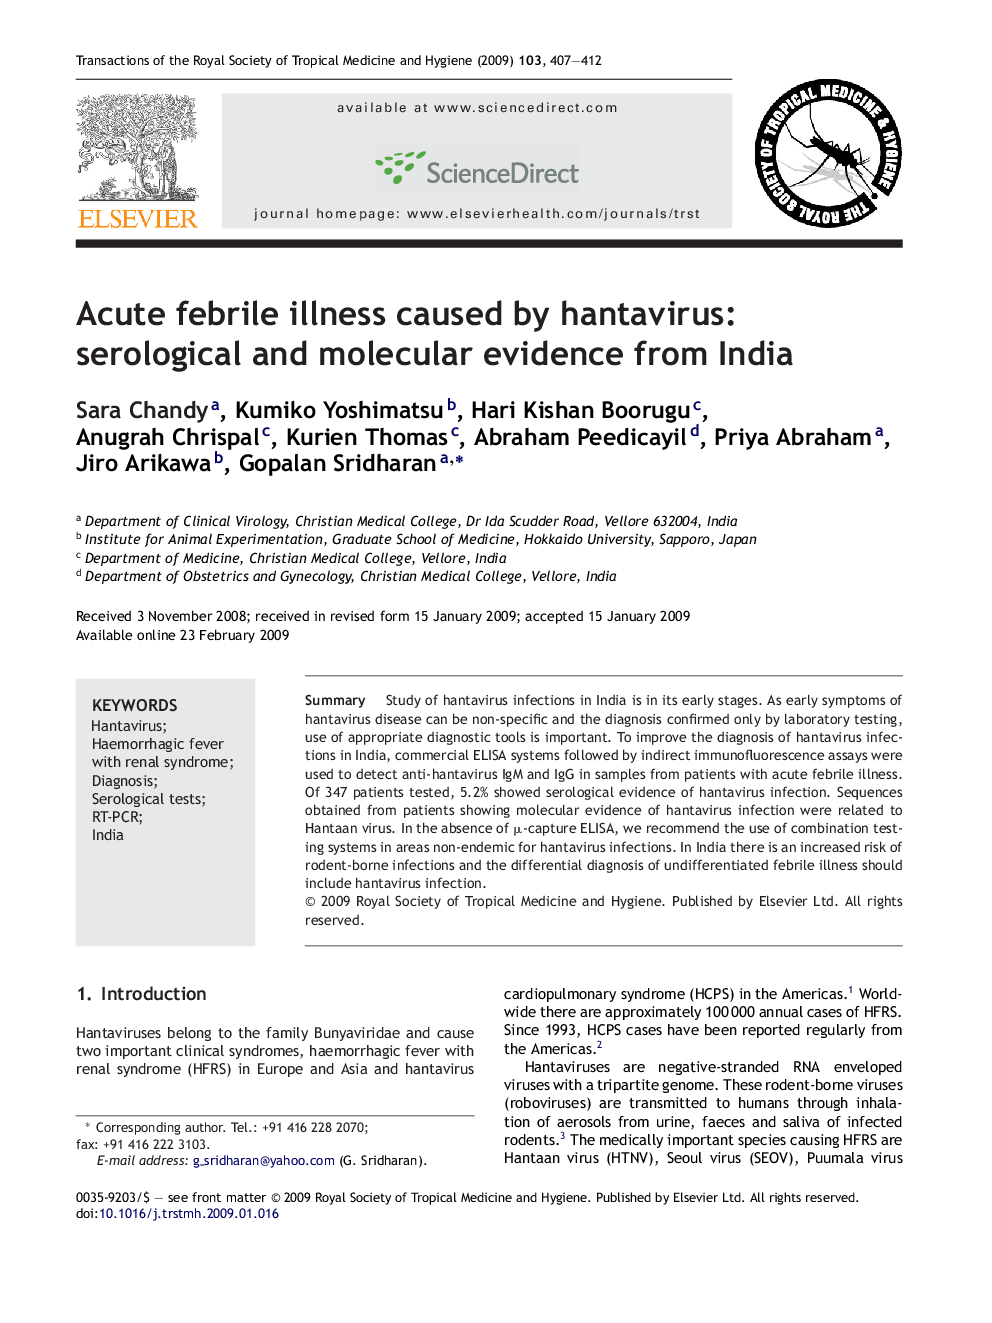 Acute febrile illness caused by hantavirus: serological and molecular evidence from India